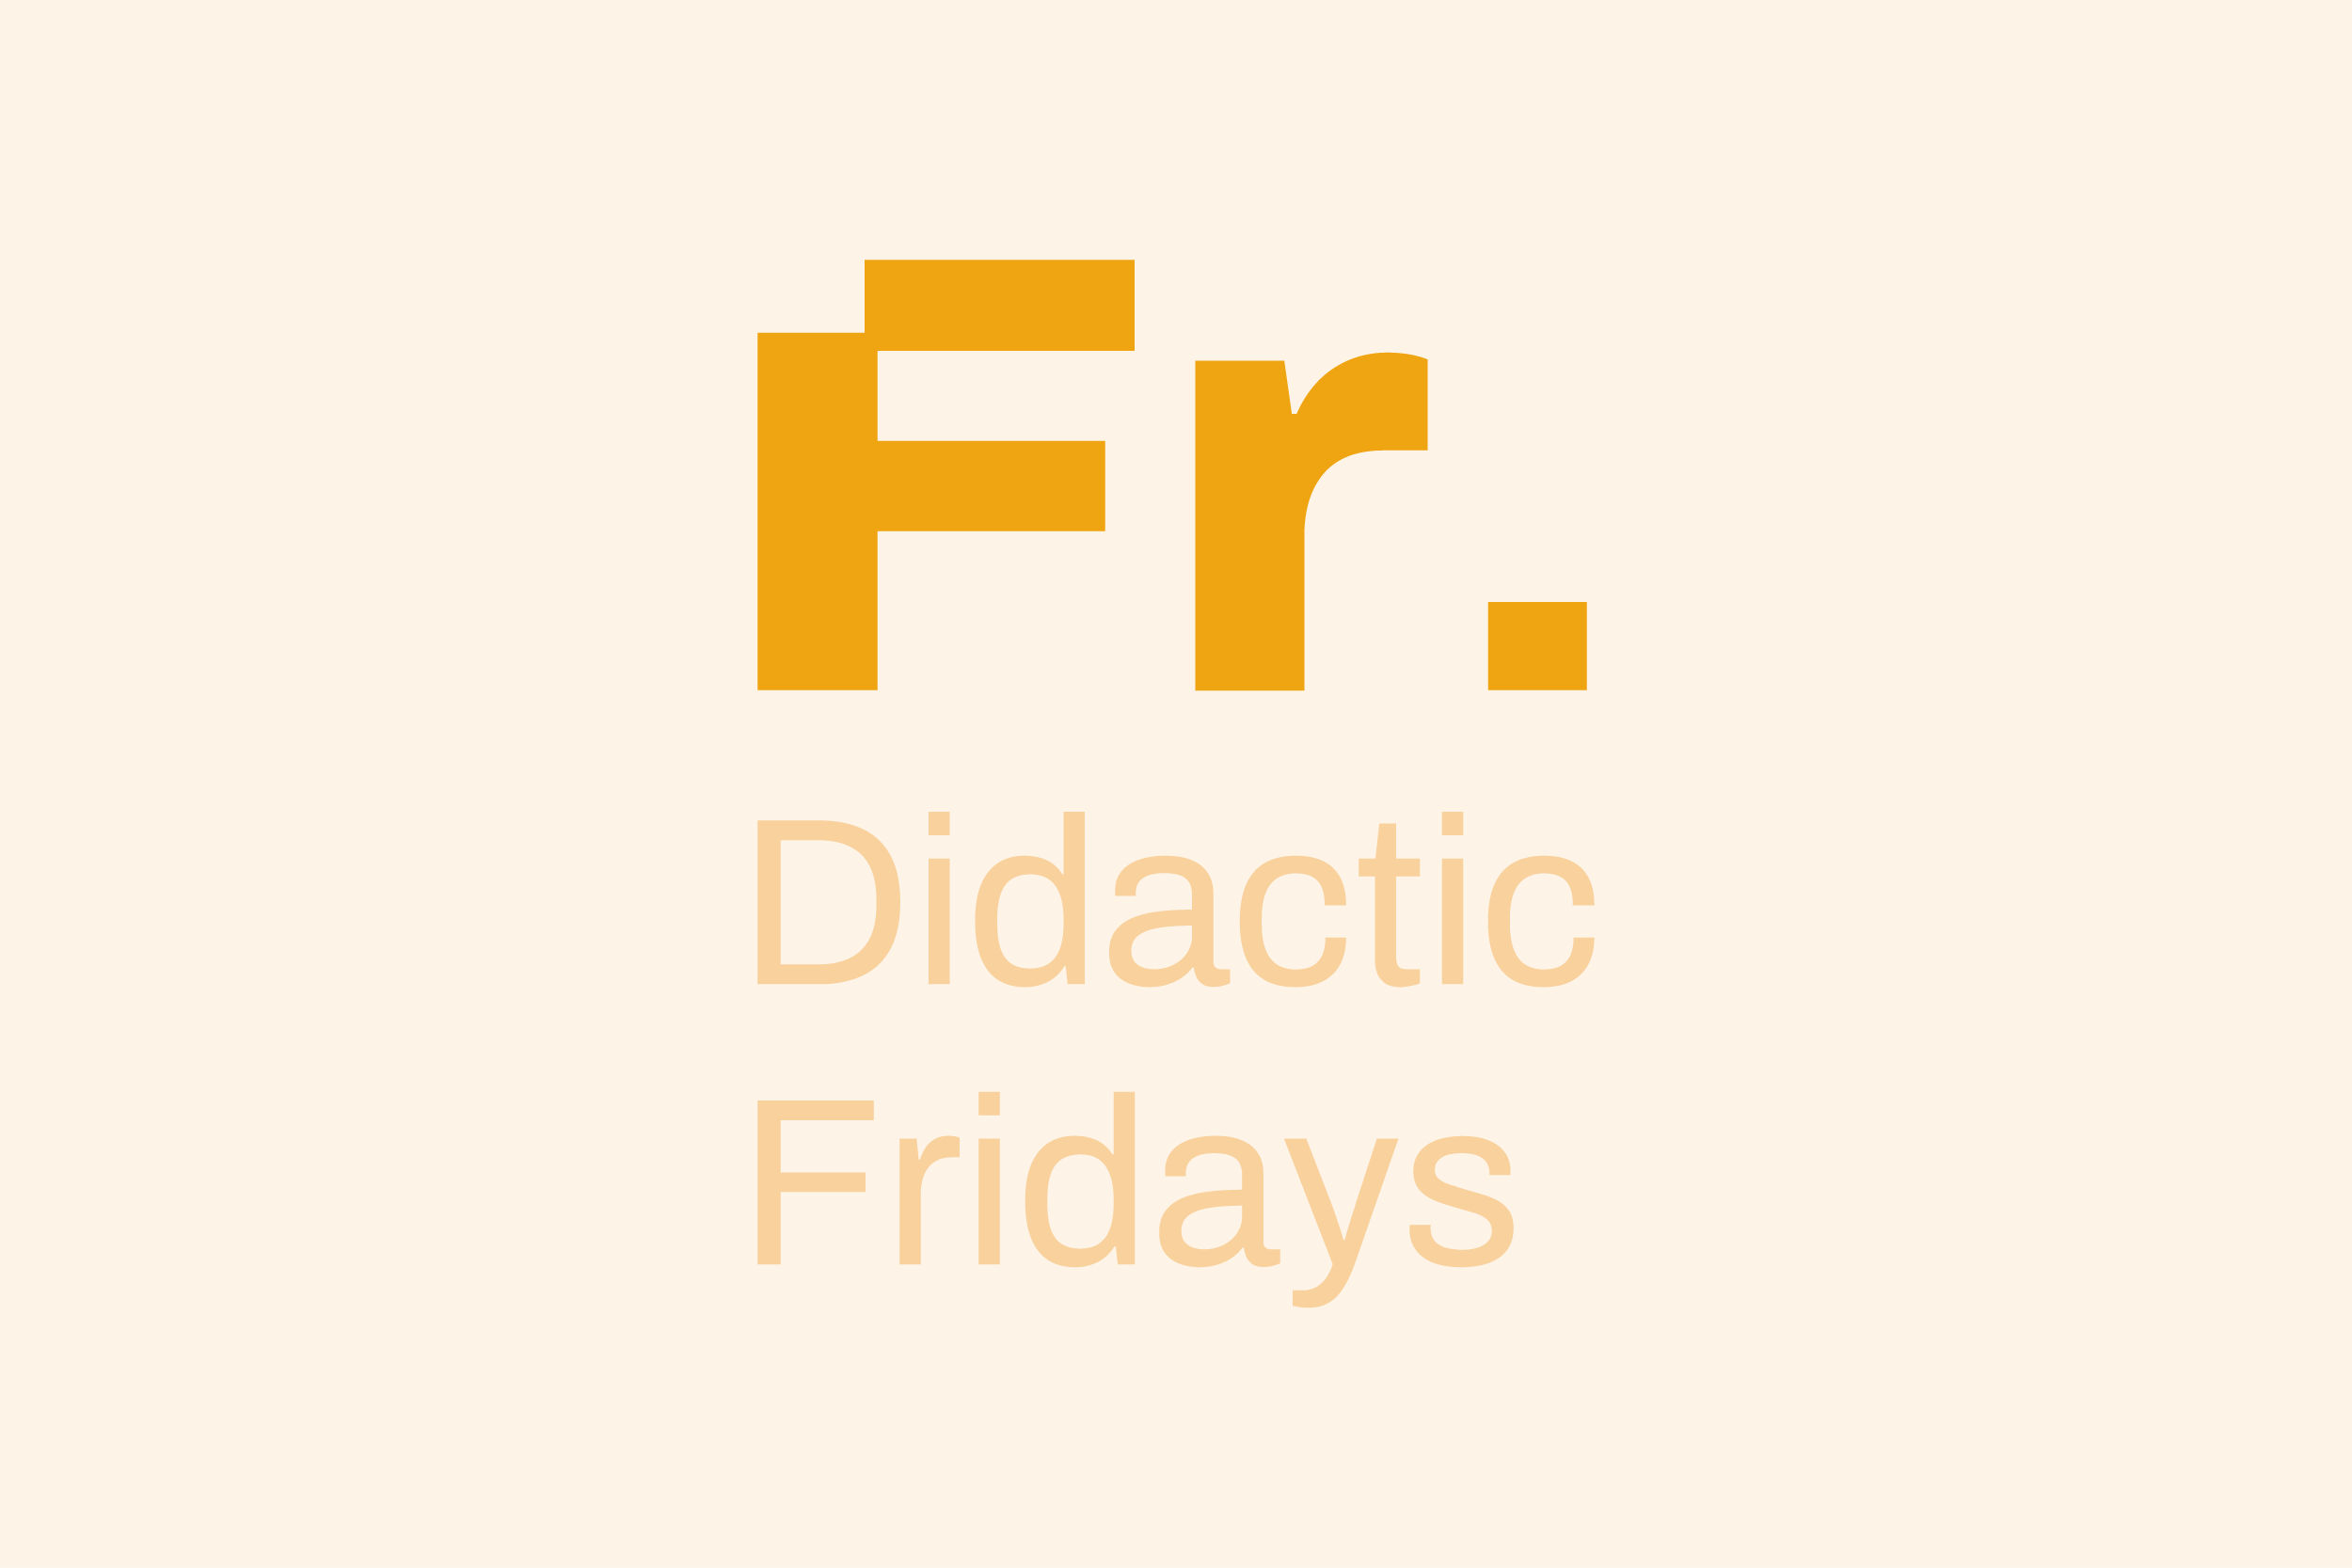 logotyp z napisem „Didactic Fridays”